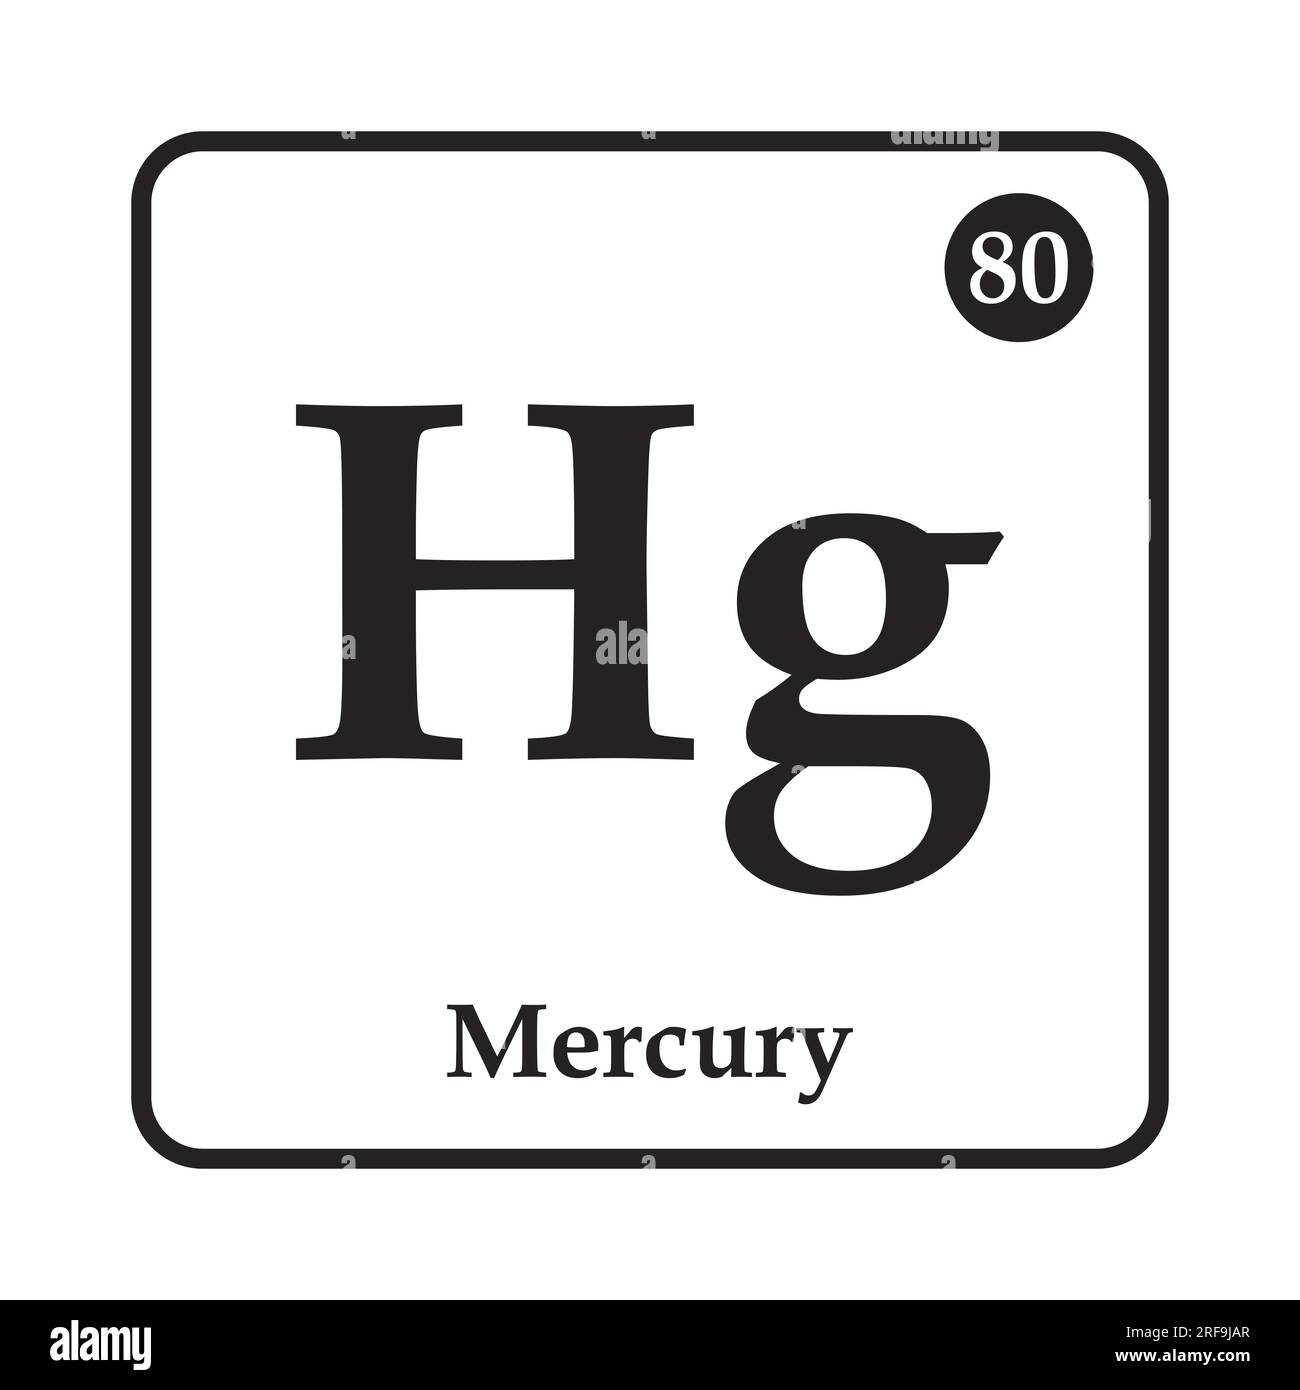 Mercury icon, 80 Hg Mercury vector illustration symbol design Stock Photo